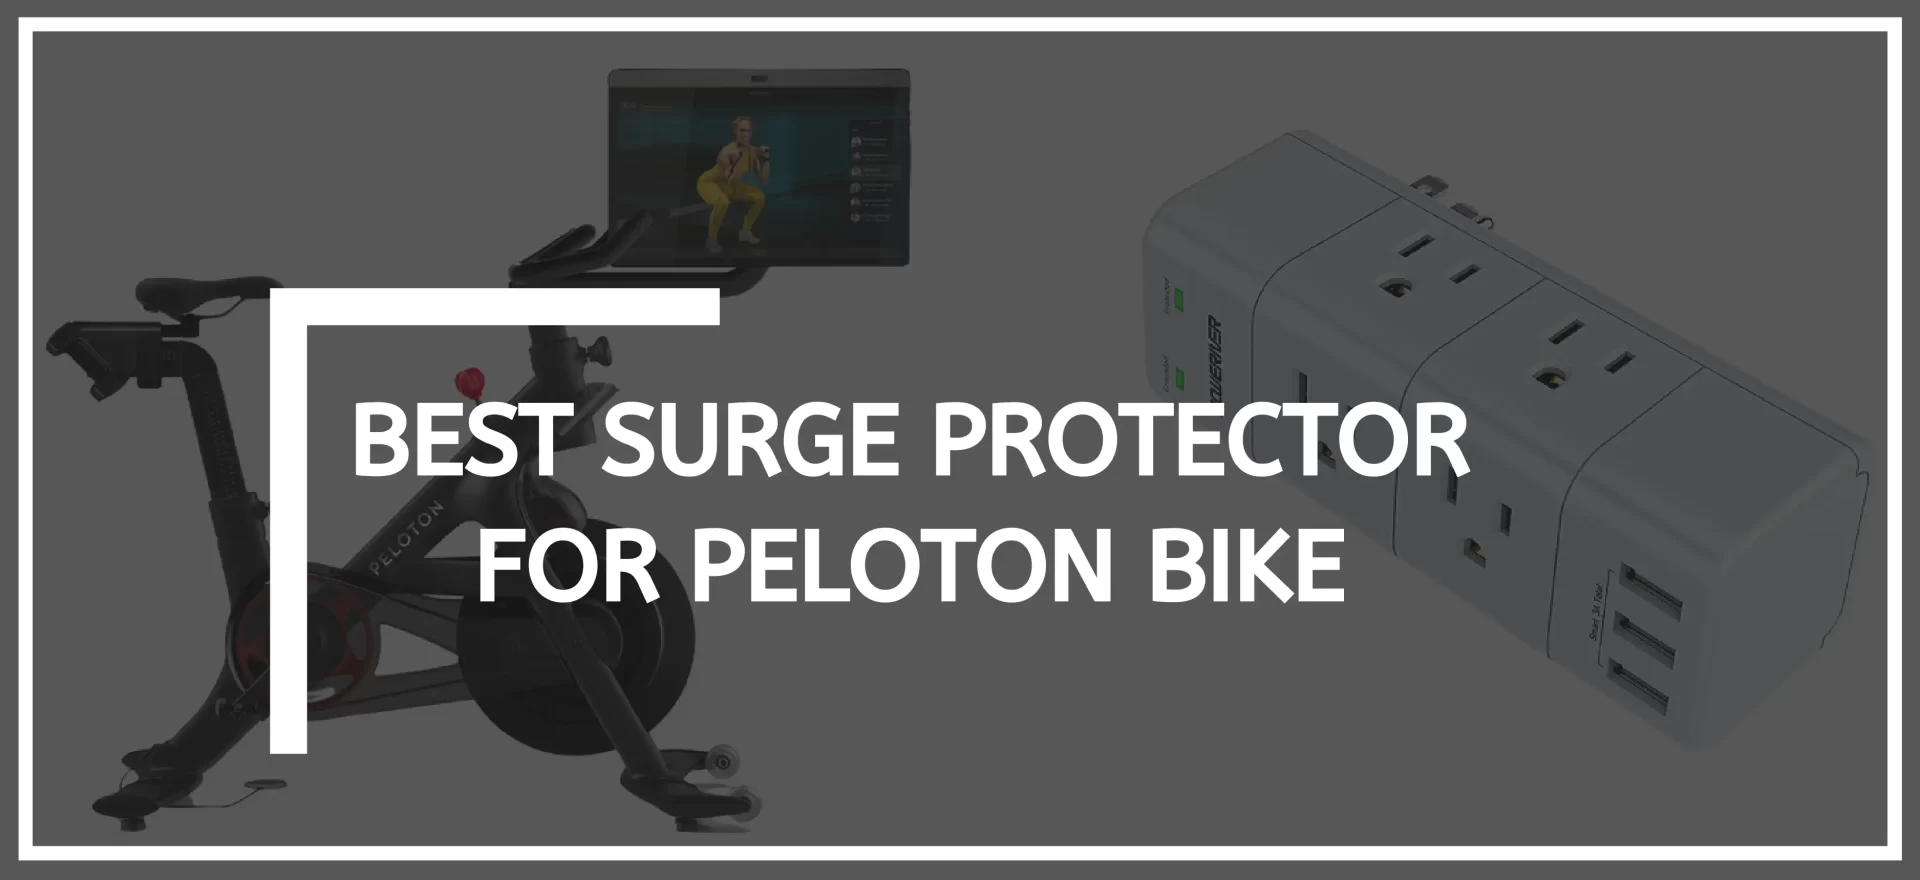 Best Surge Protector For Peloton Bike